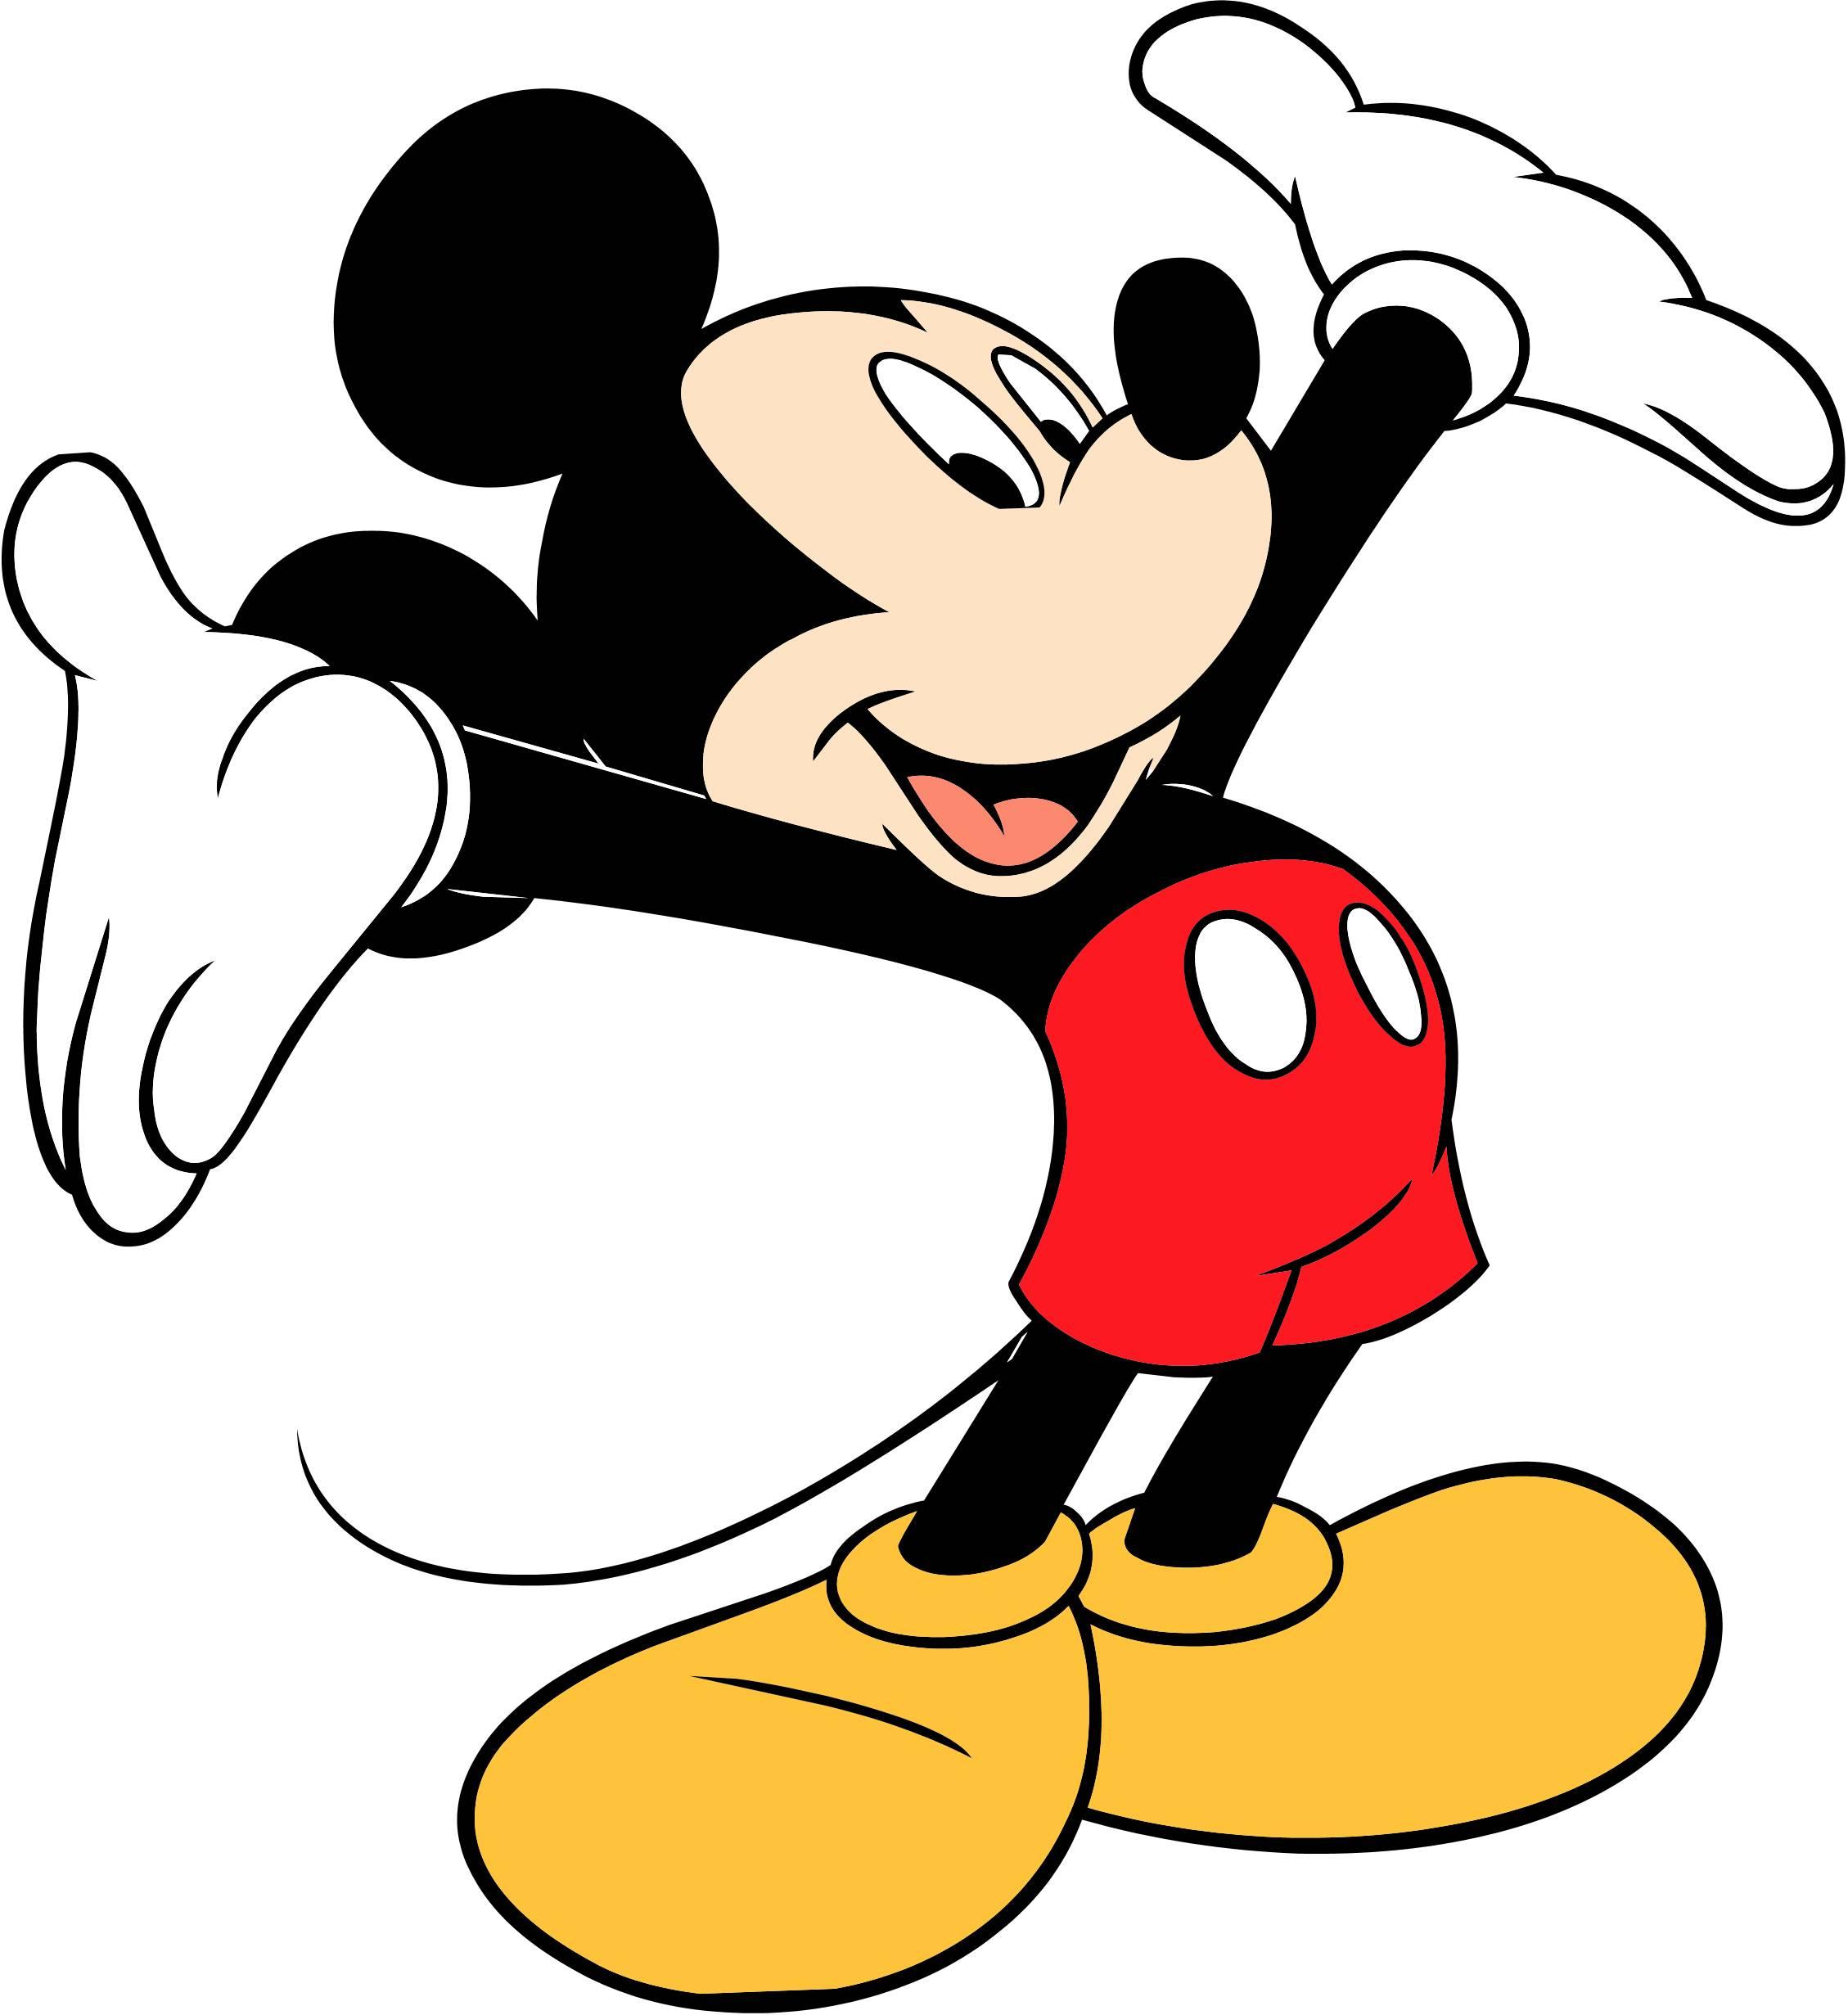 mickey-mouse-image-hd-disney.jpg